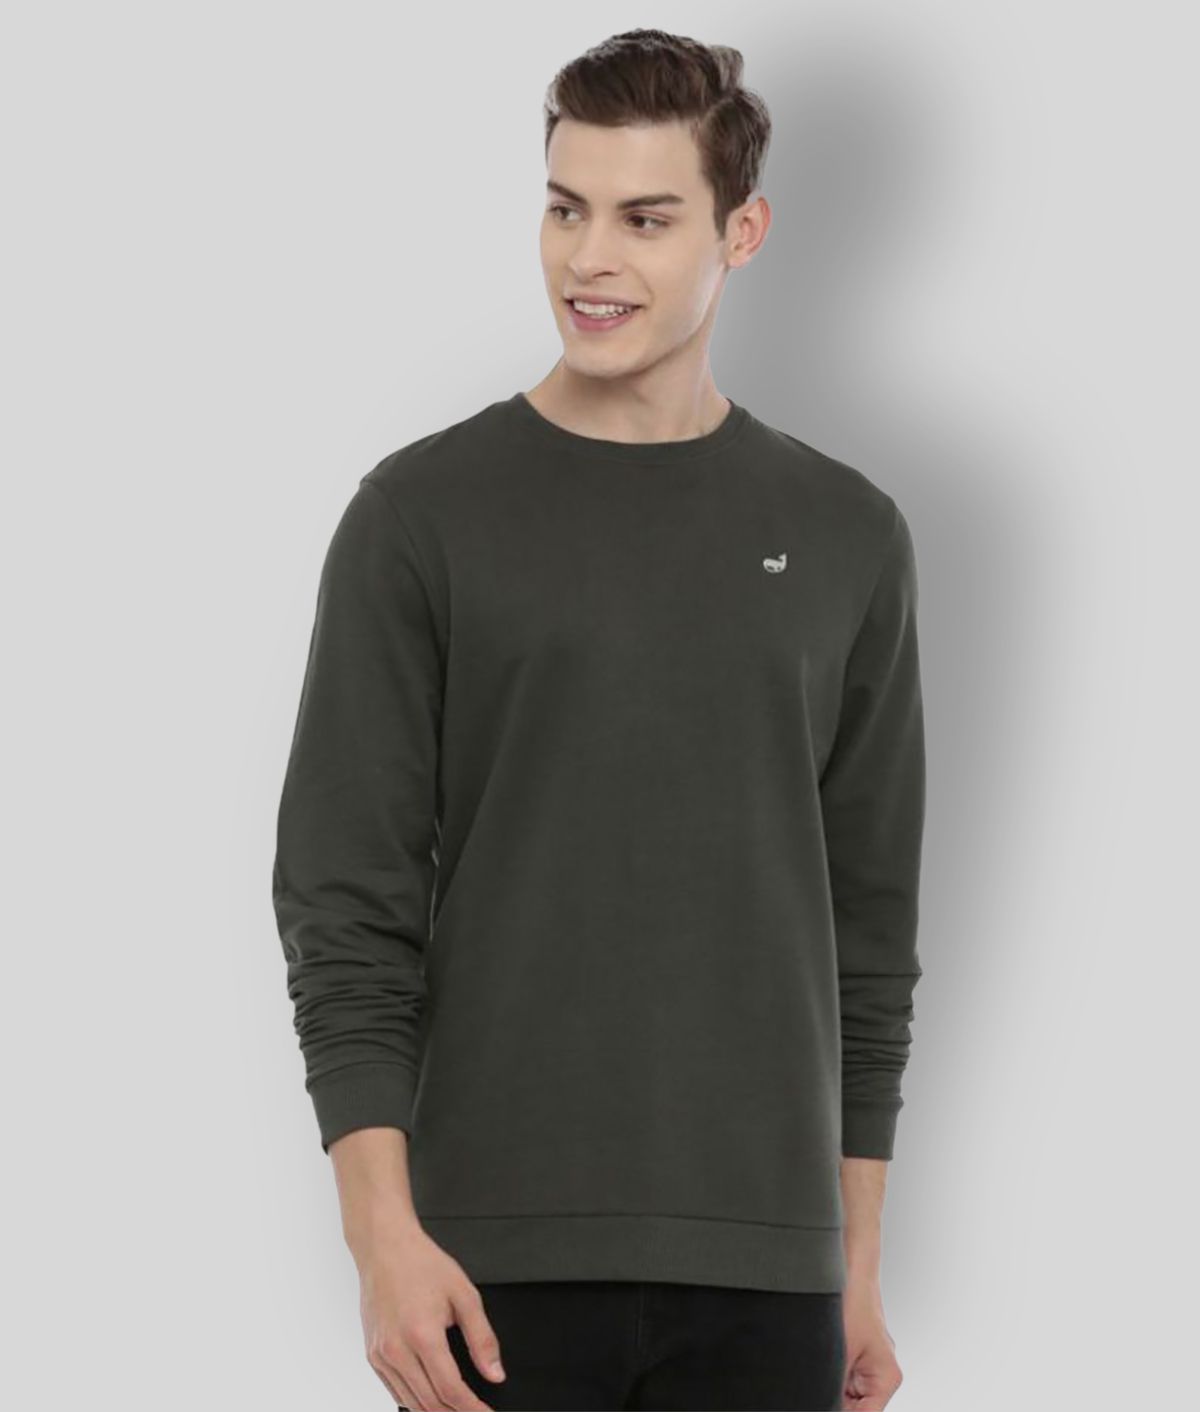     			3PIN Olive Sweatshirt Pack of 1